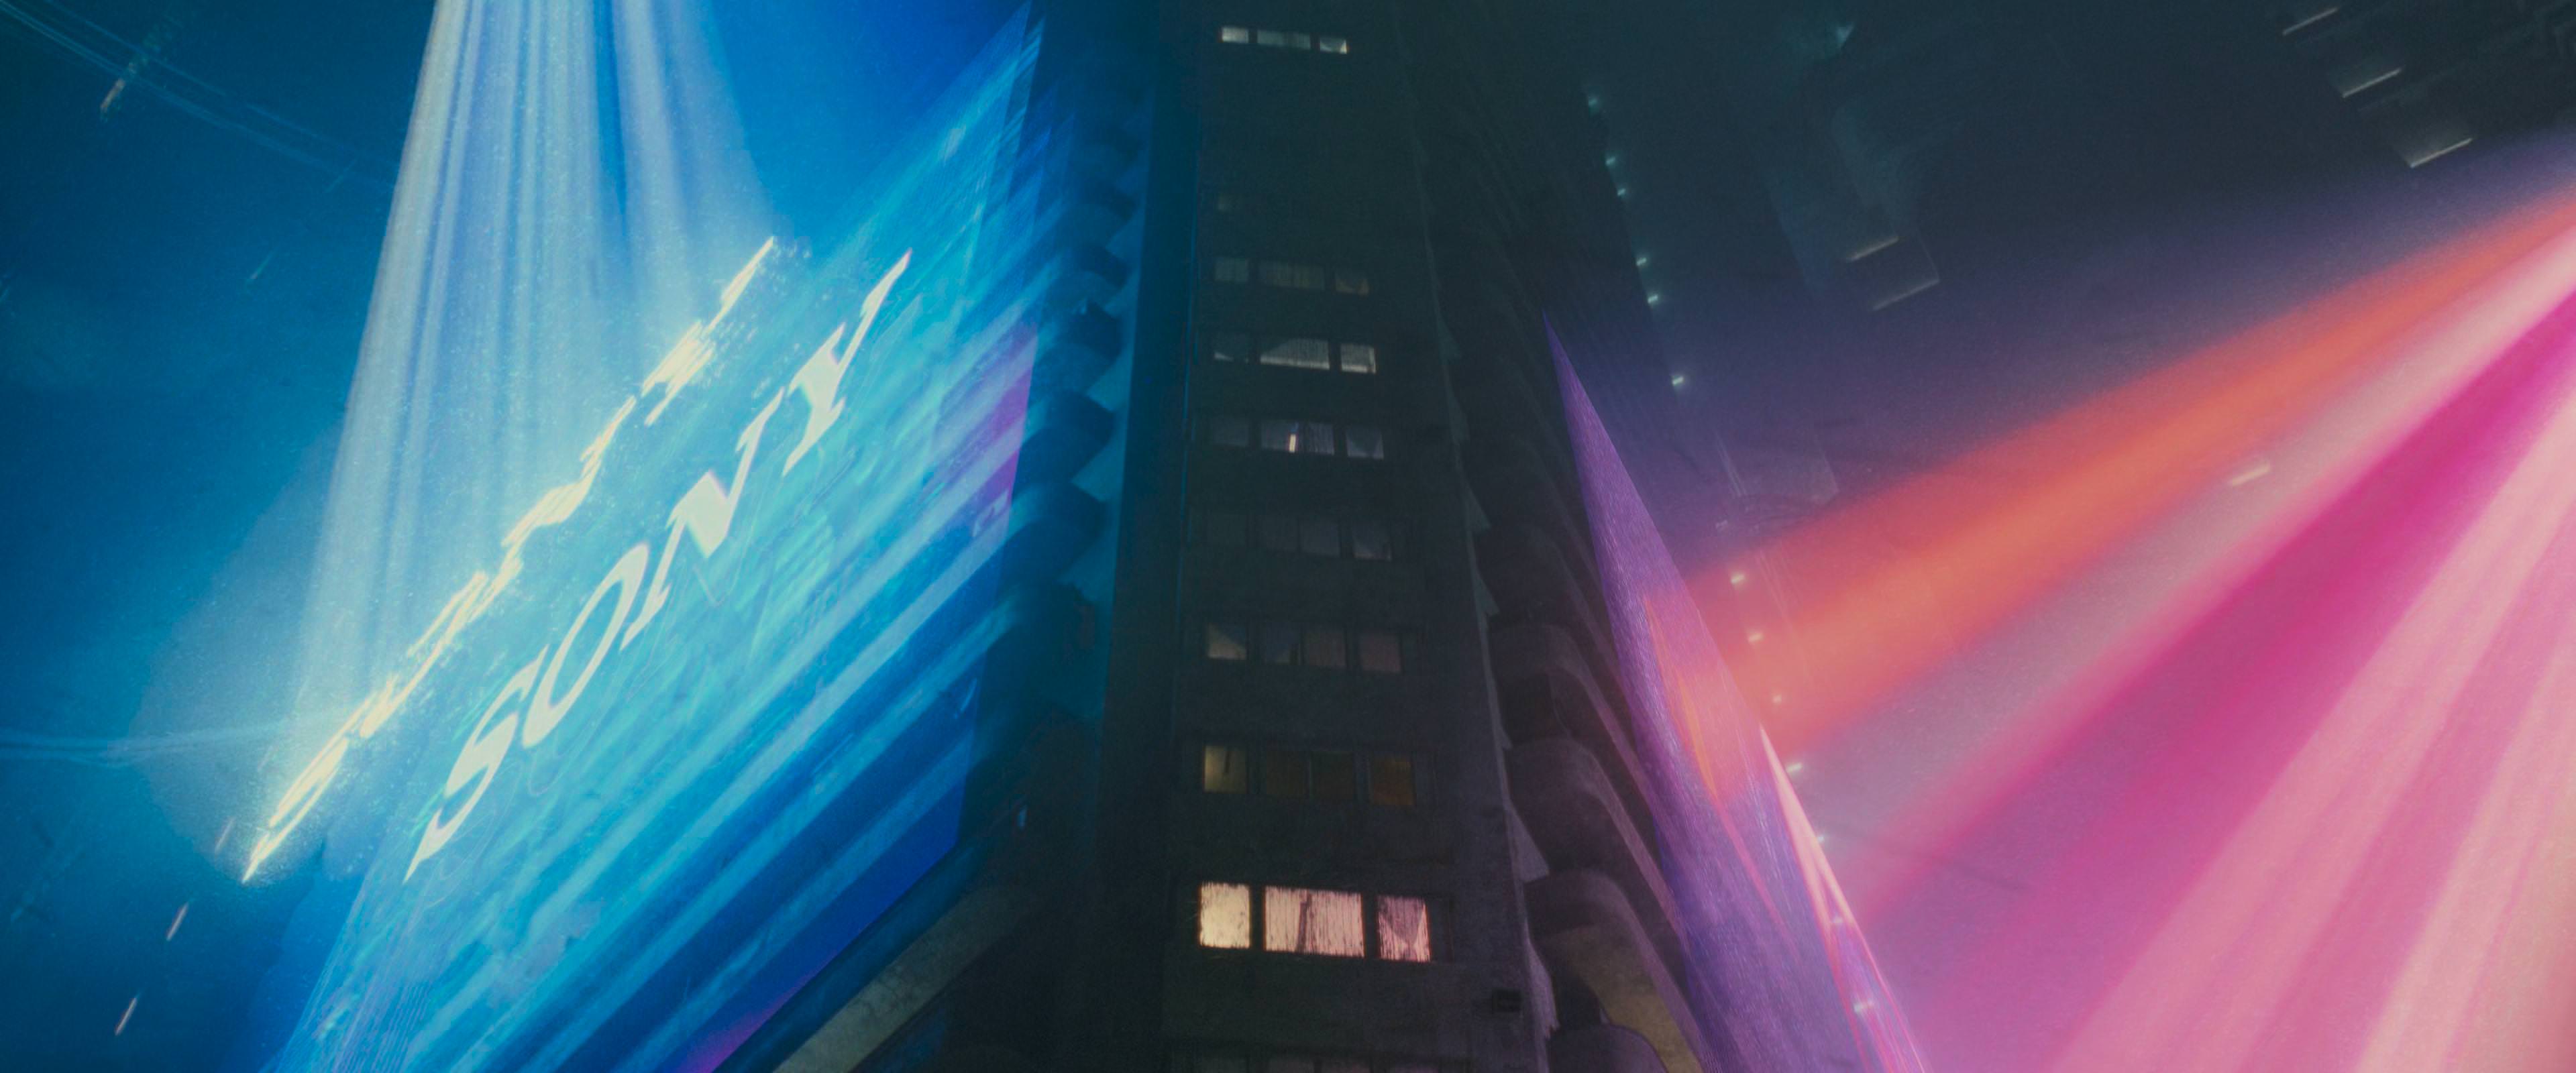 Wallpaper Blade Runner 2049 Officer K Cyberpunk Building Tire  Background  Download Free Image